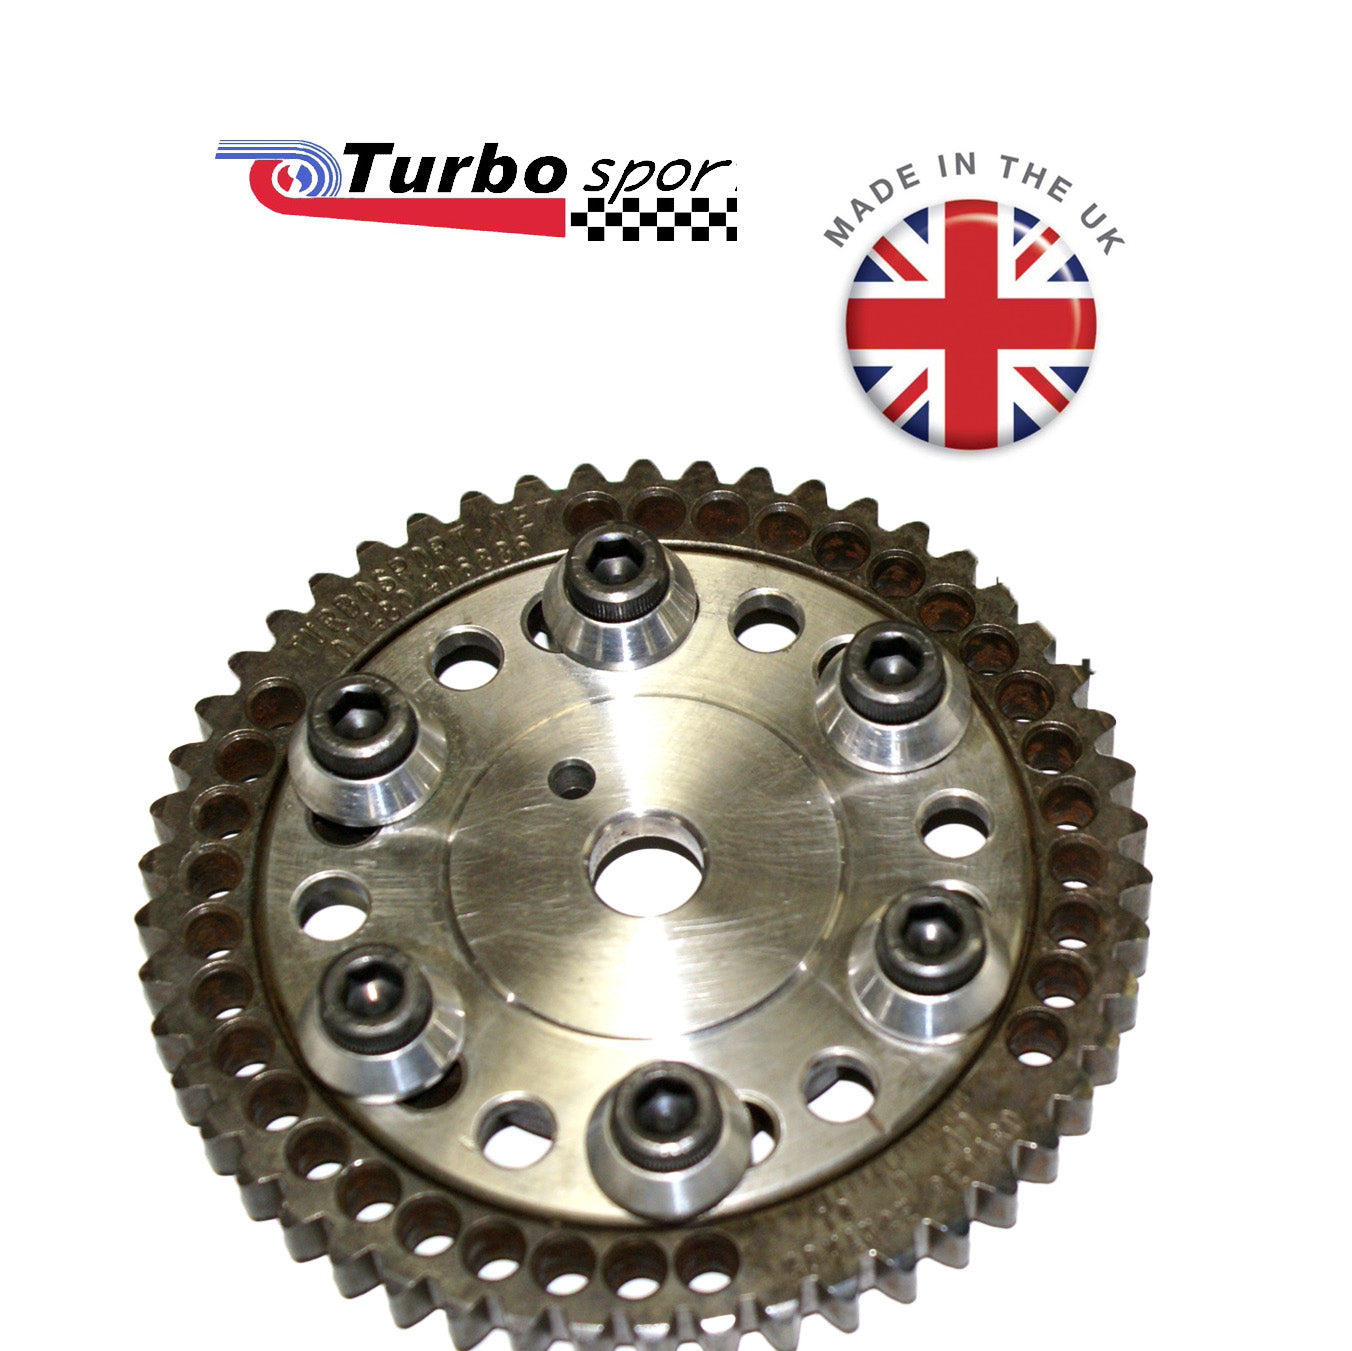 TurboSport UK Adjustable Cam Gear - Ford Duratec Engine 2.0 2.3 2.5 - Massive Speed System